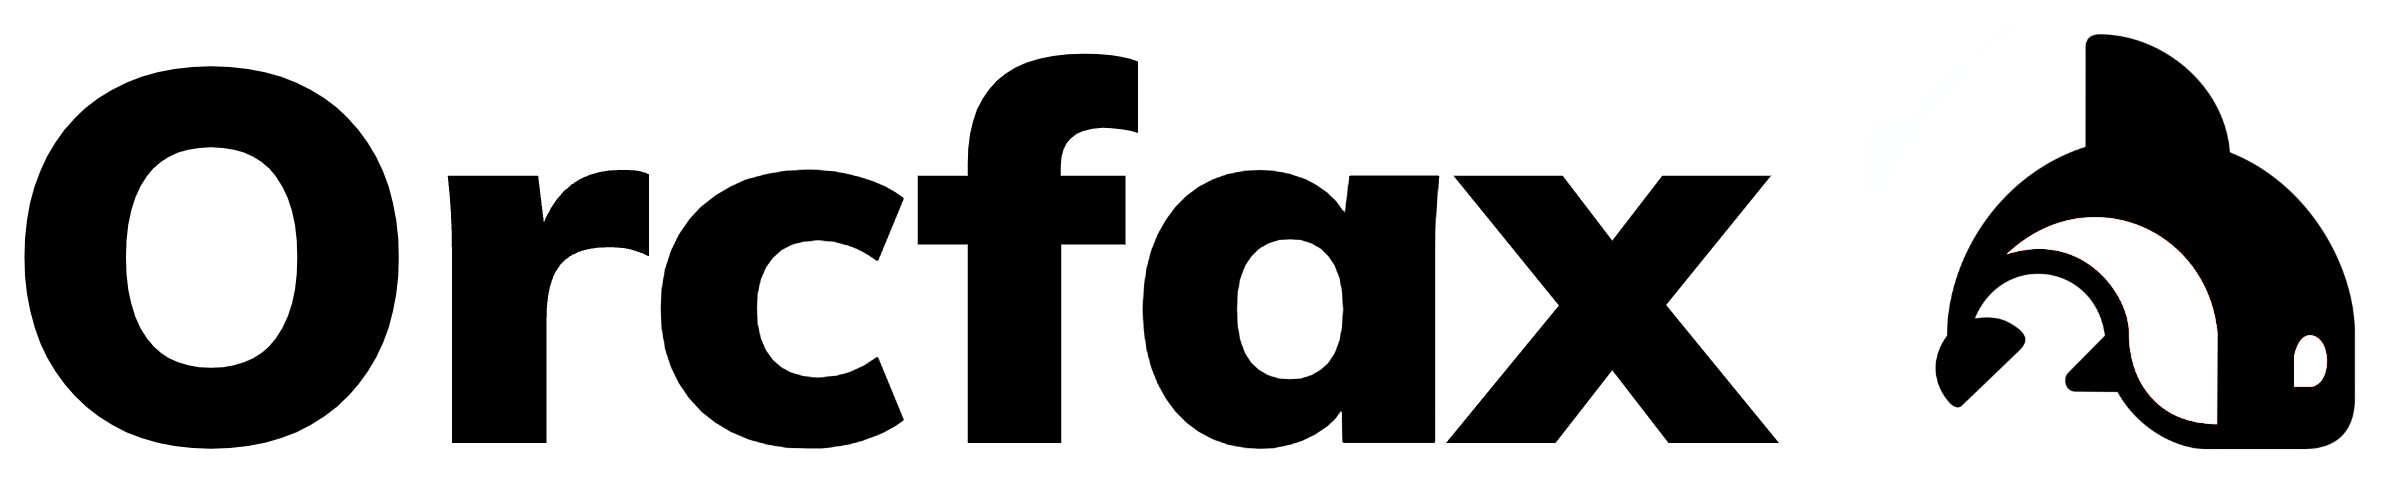 Orcfax Logo